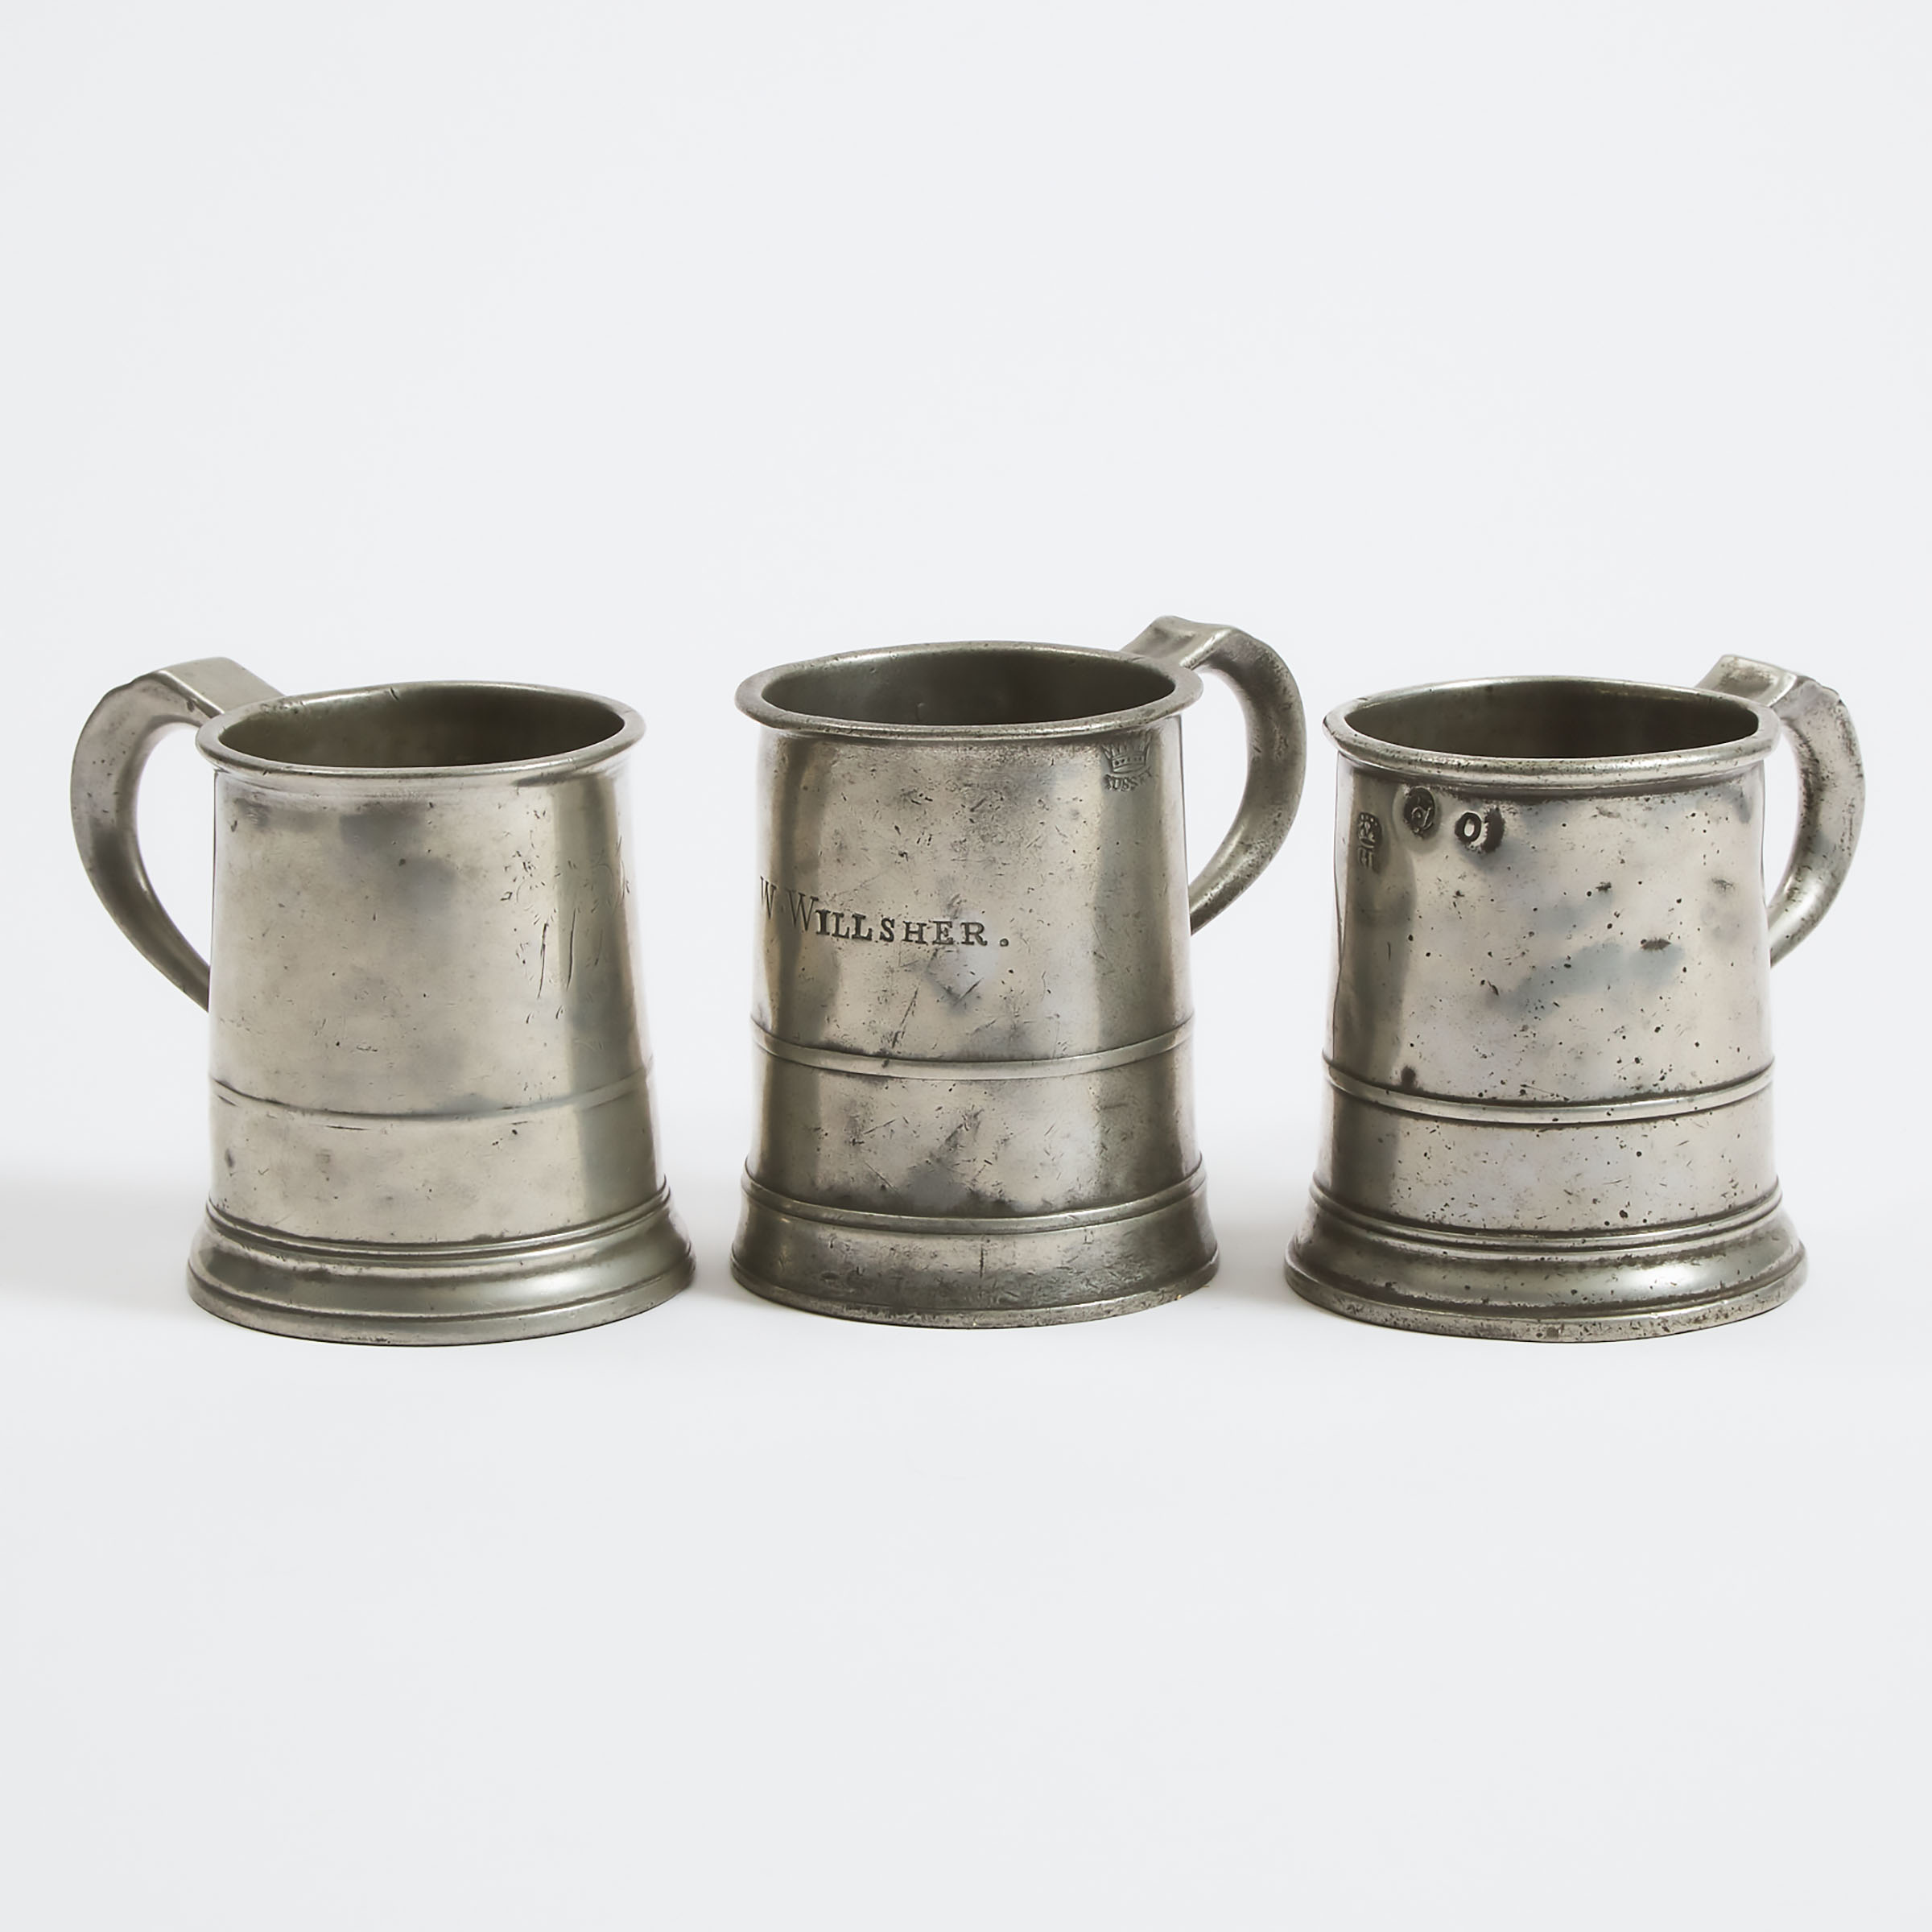 Three English Pewter Pint Mugs, London,  19th century